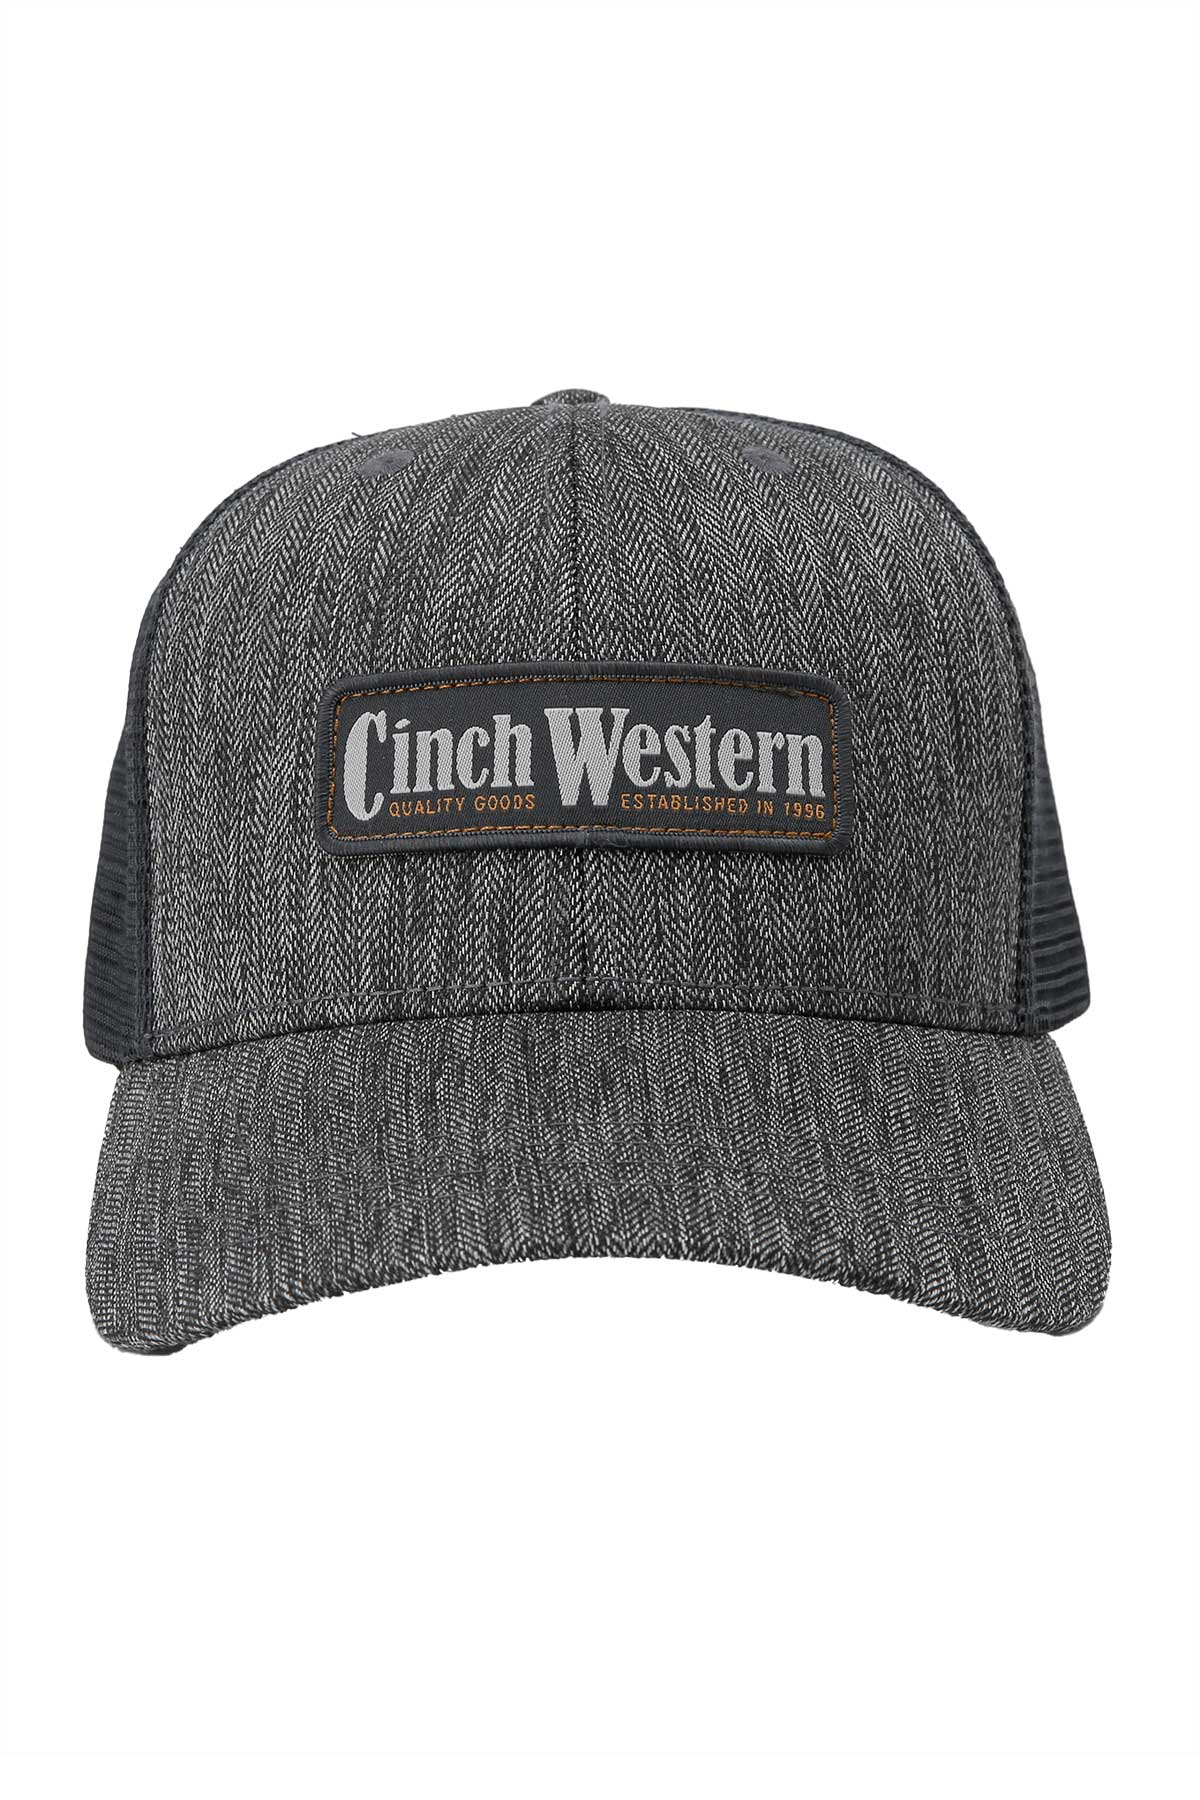 Cinch Grey Trucker Back Cap